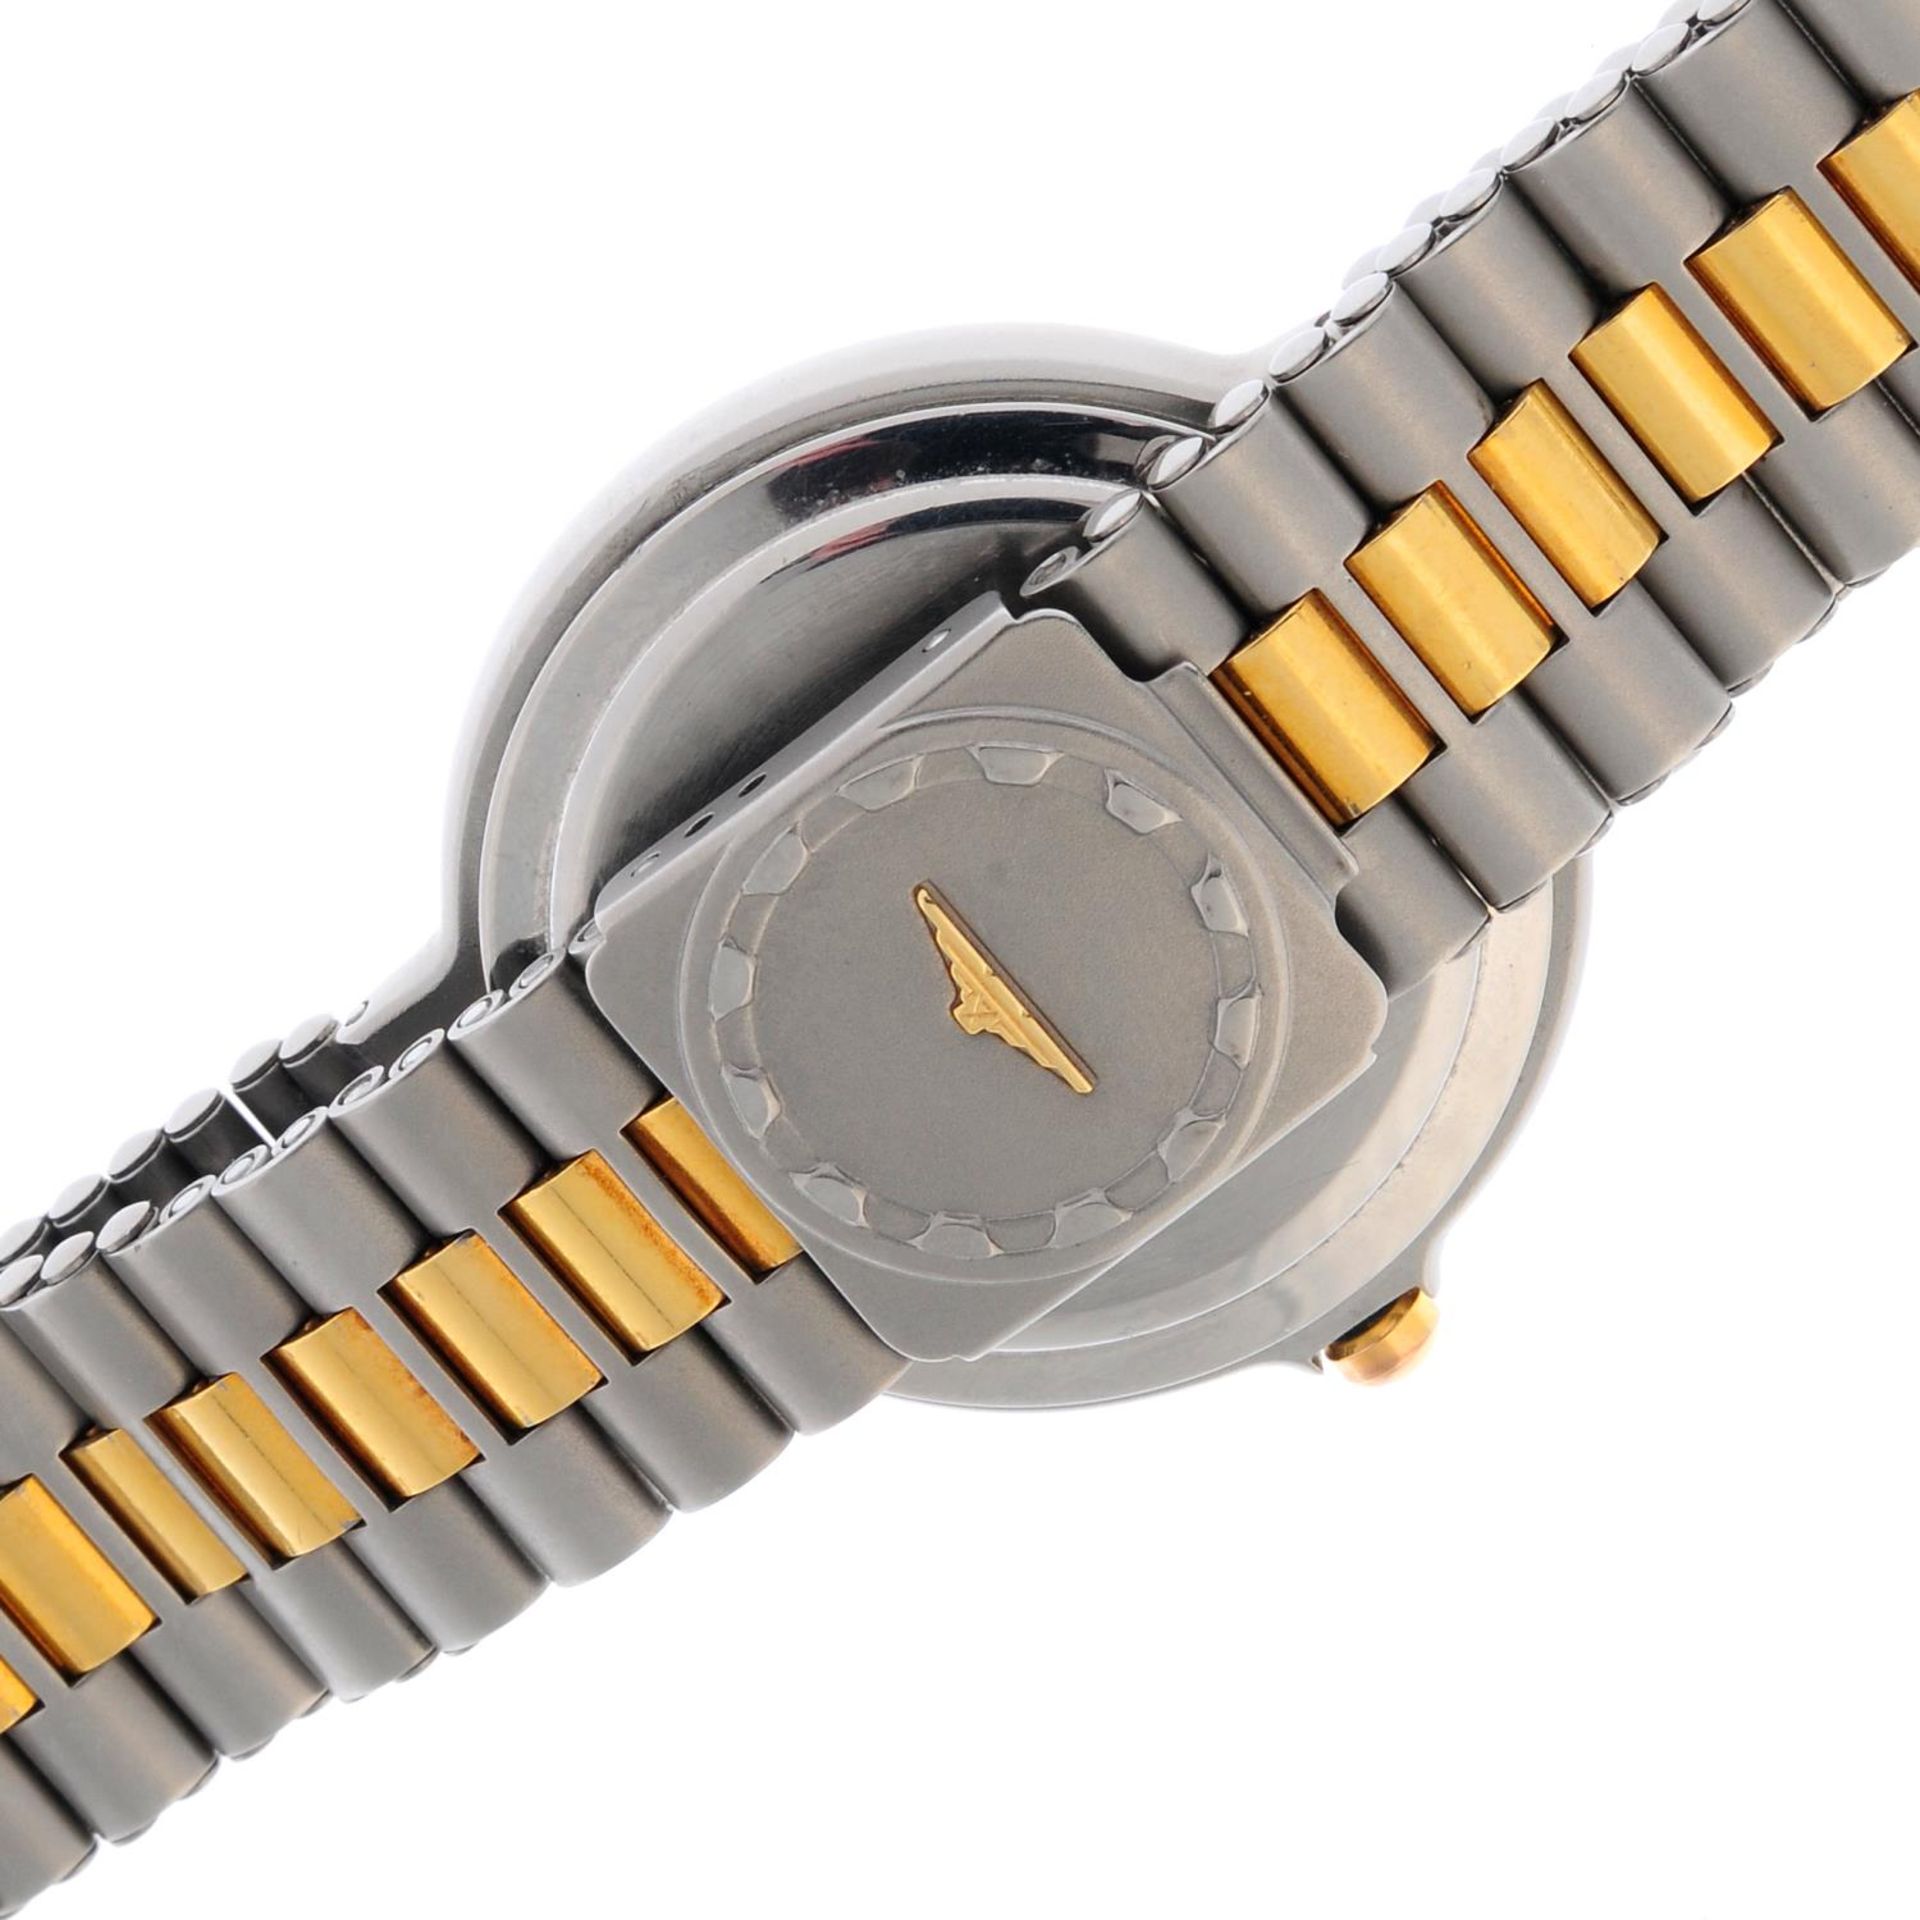 LONGINES - a Conquest bracelet watch. - Image 2 of 4